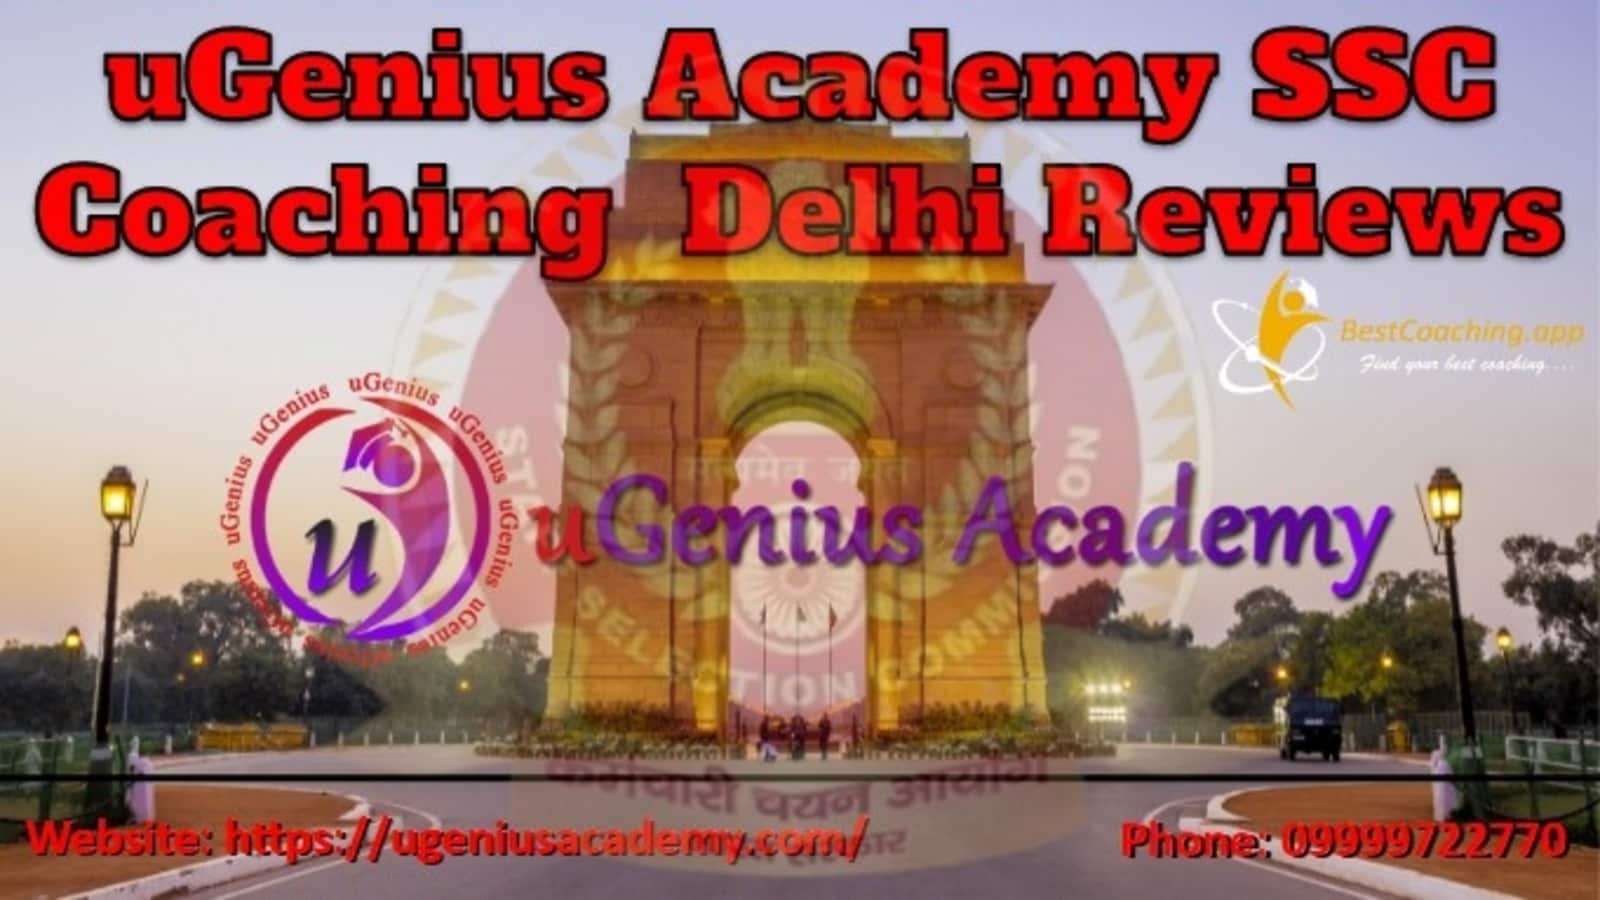 uGenius Academy SSC Coaching in Delhi